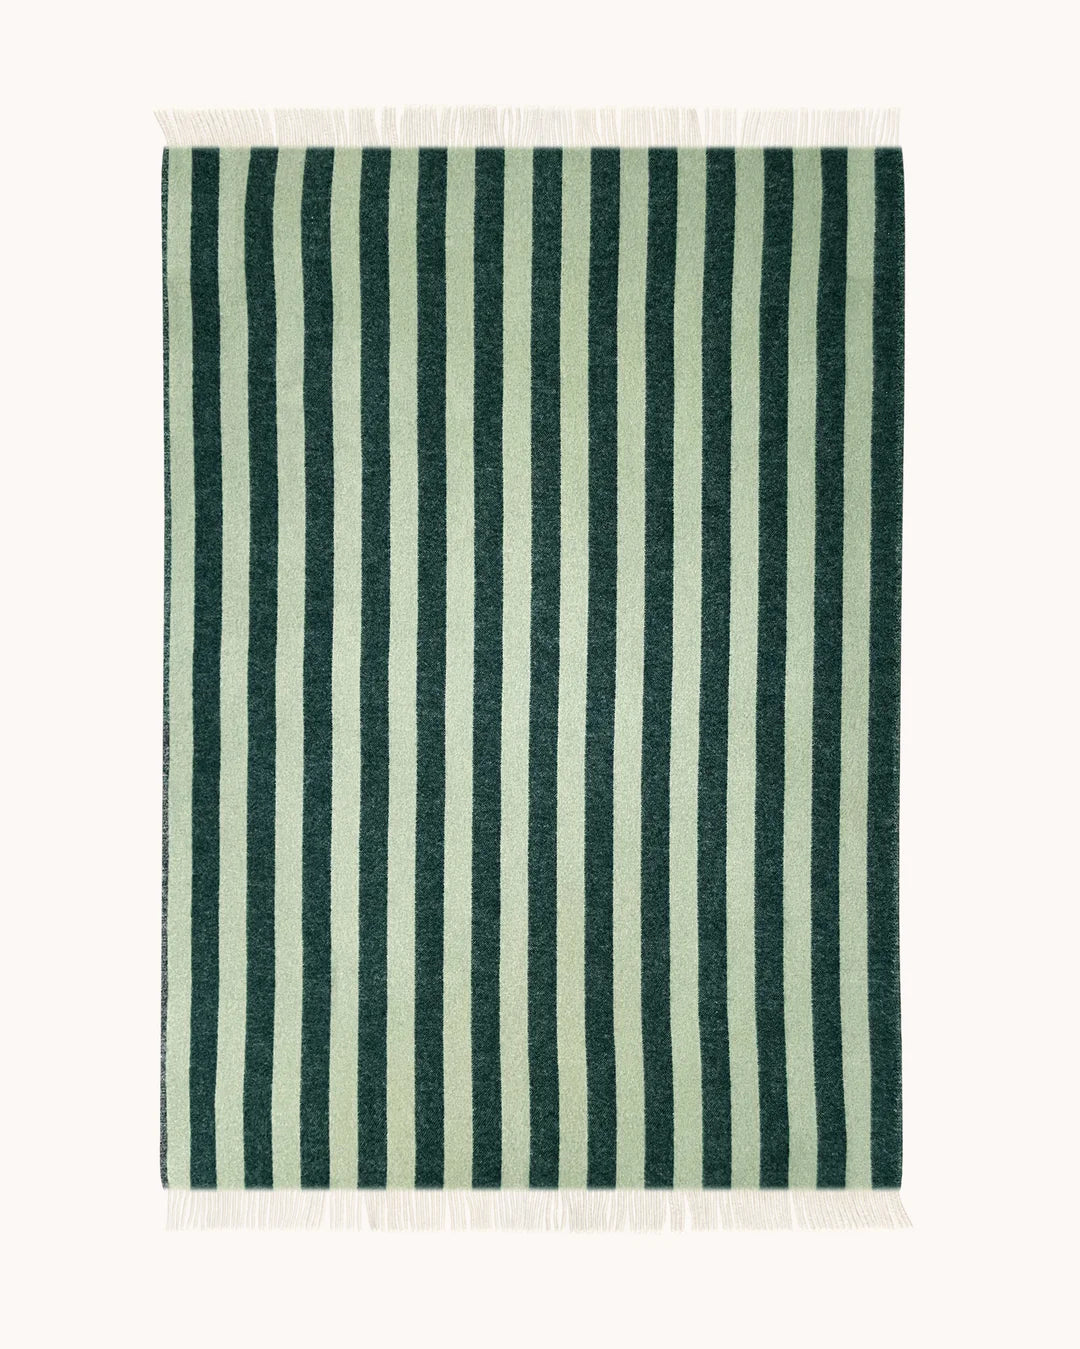 Maison Deux - Green Sage Candy Wrap Blanket